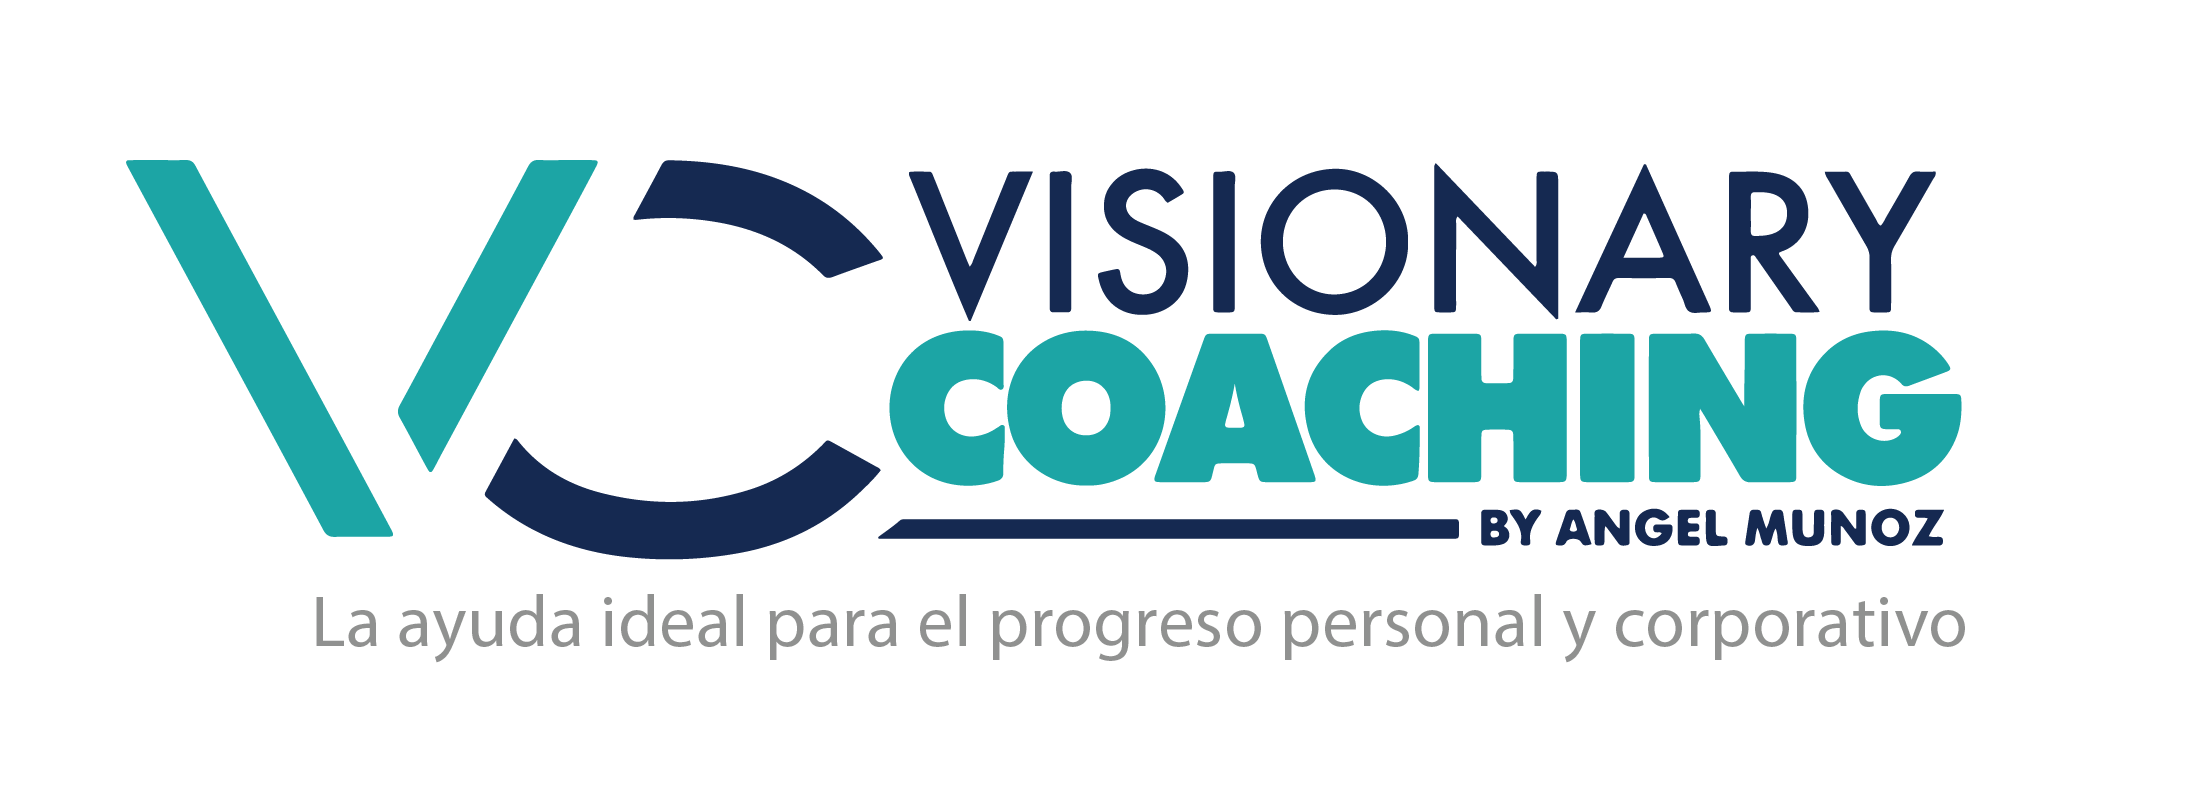 Visionary Coaching by Angel Muñoz